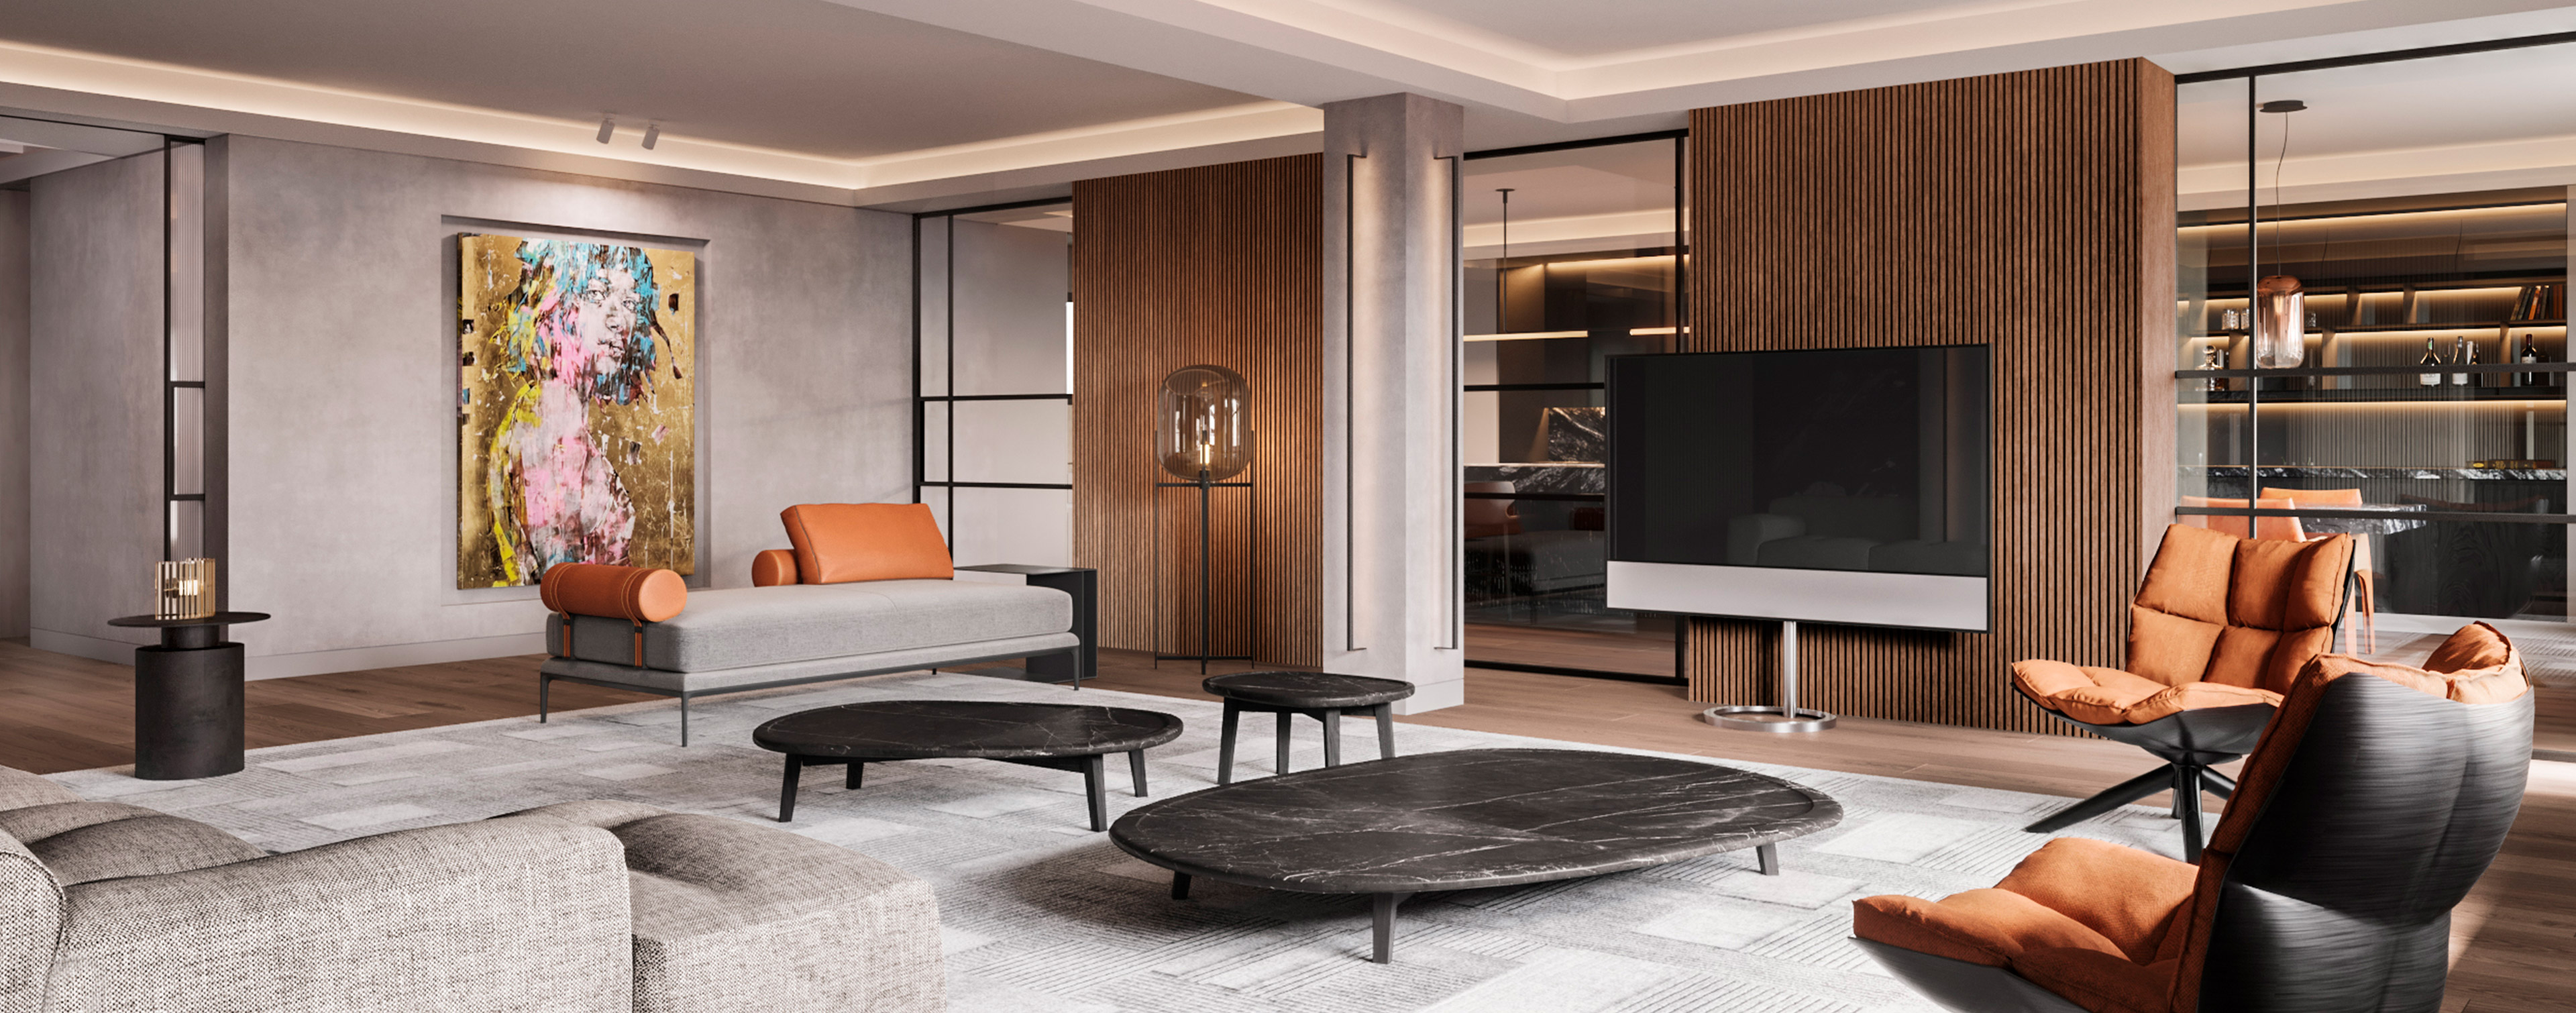 luv studio luxury architects madrid padilla apartment IMG 01 - LUV Studio - Architecture & Design - Barcelona